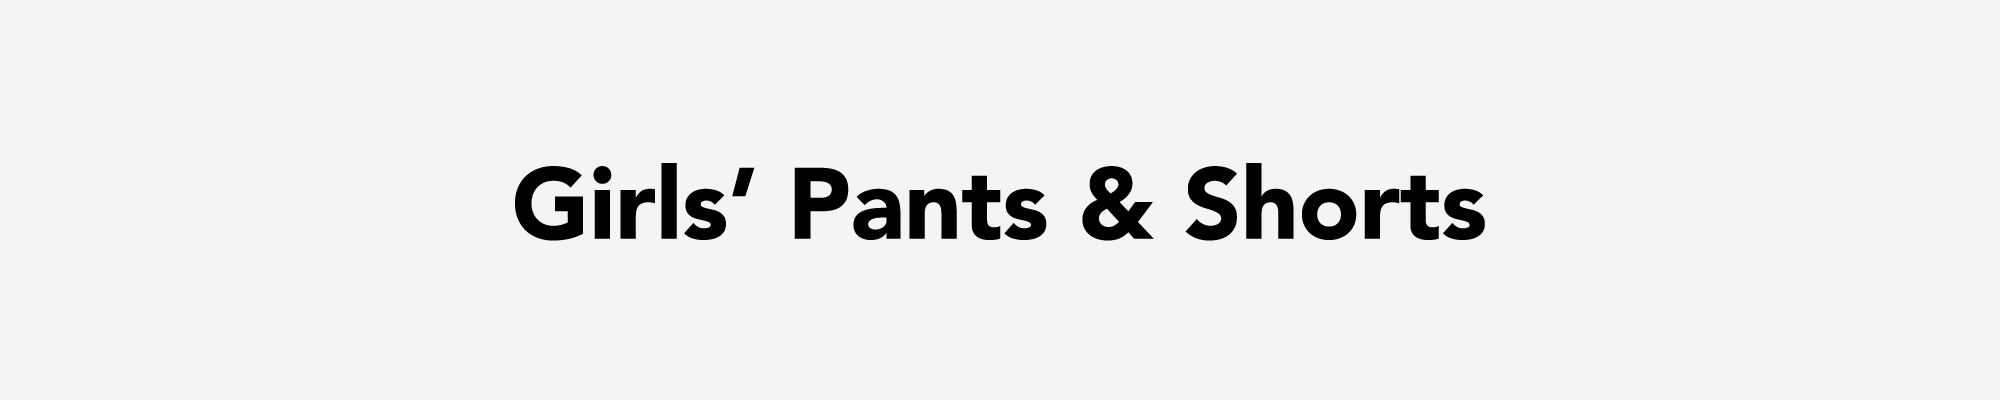 Girls' Pants & Shorts